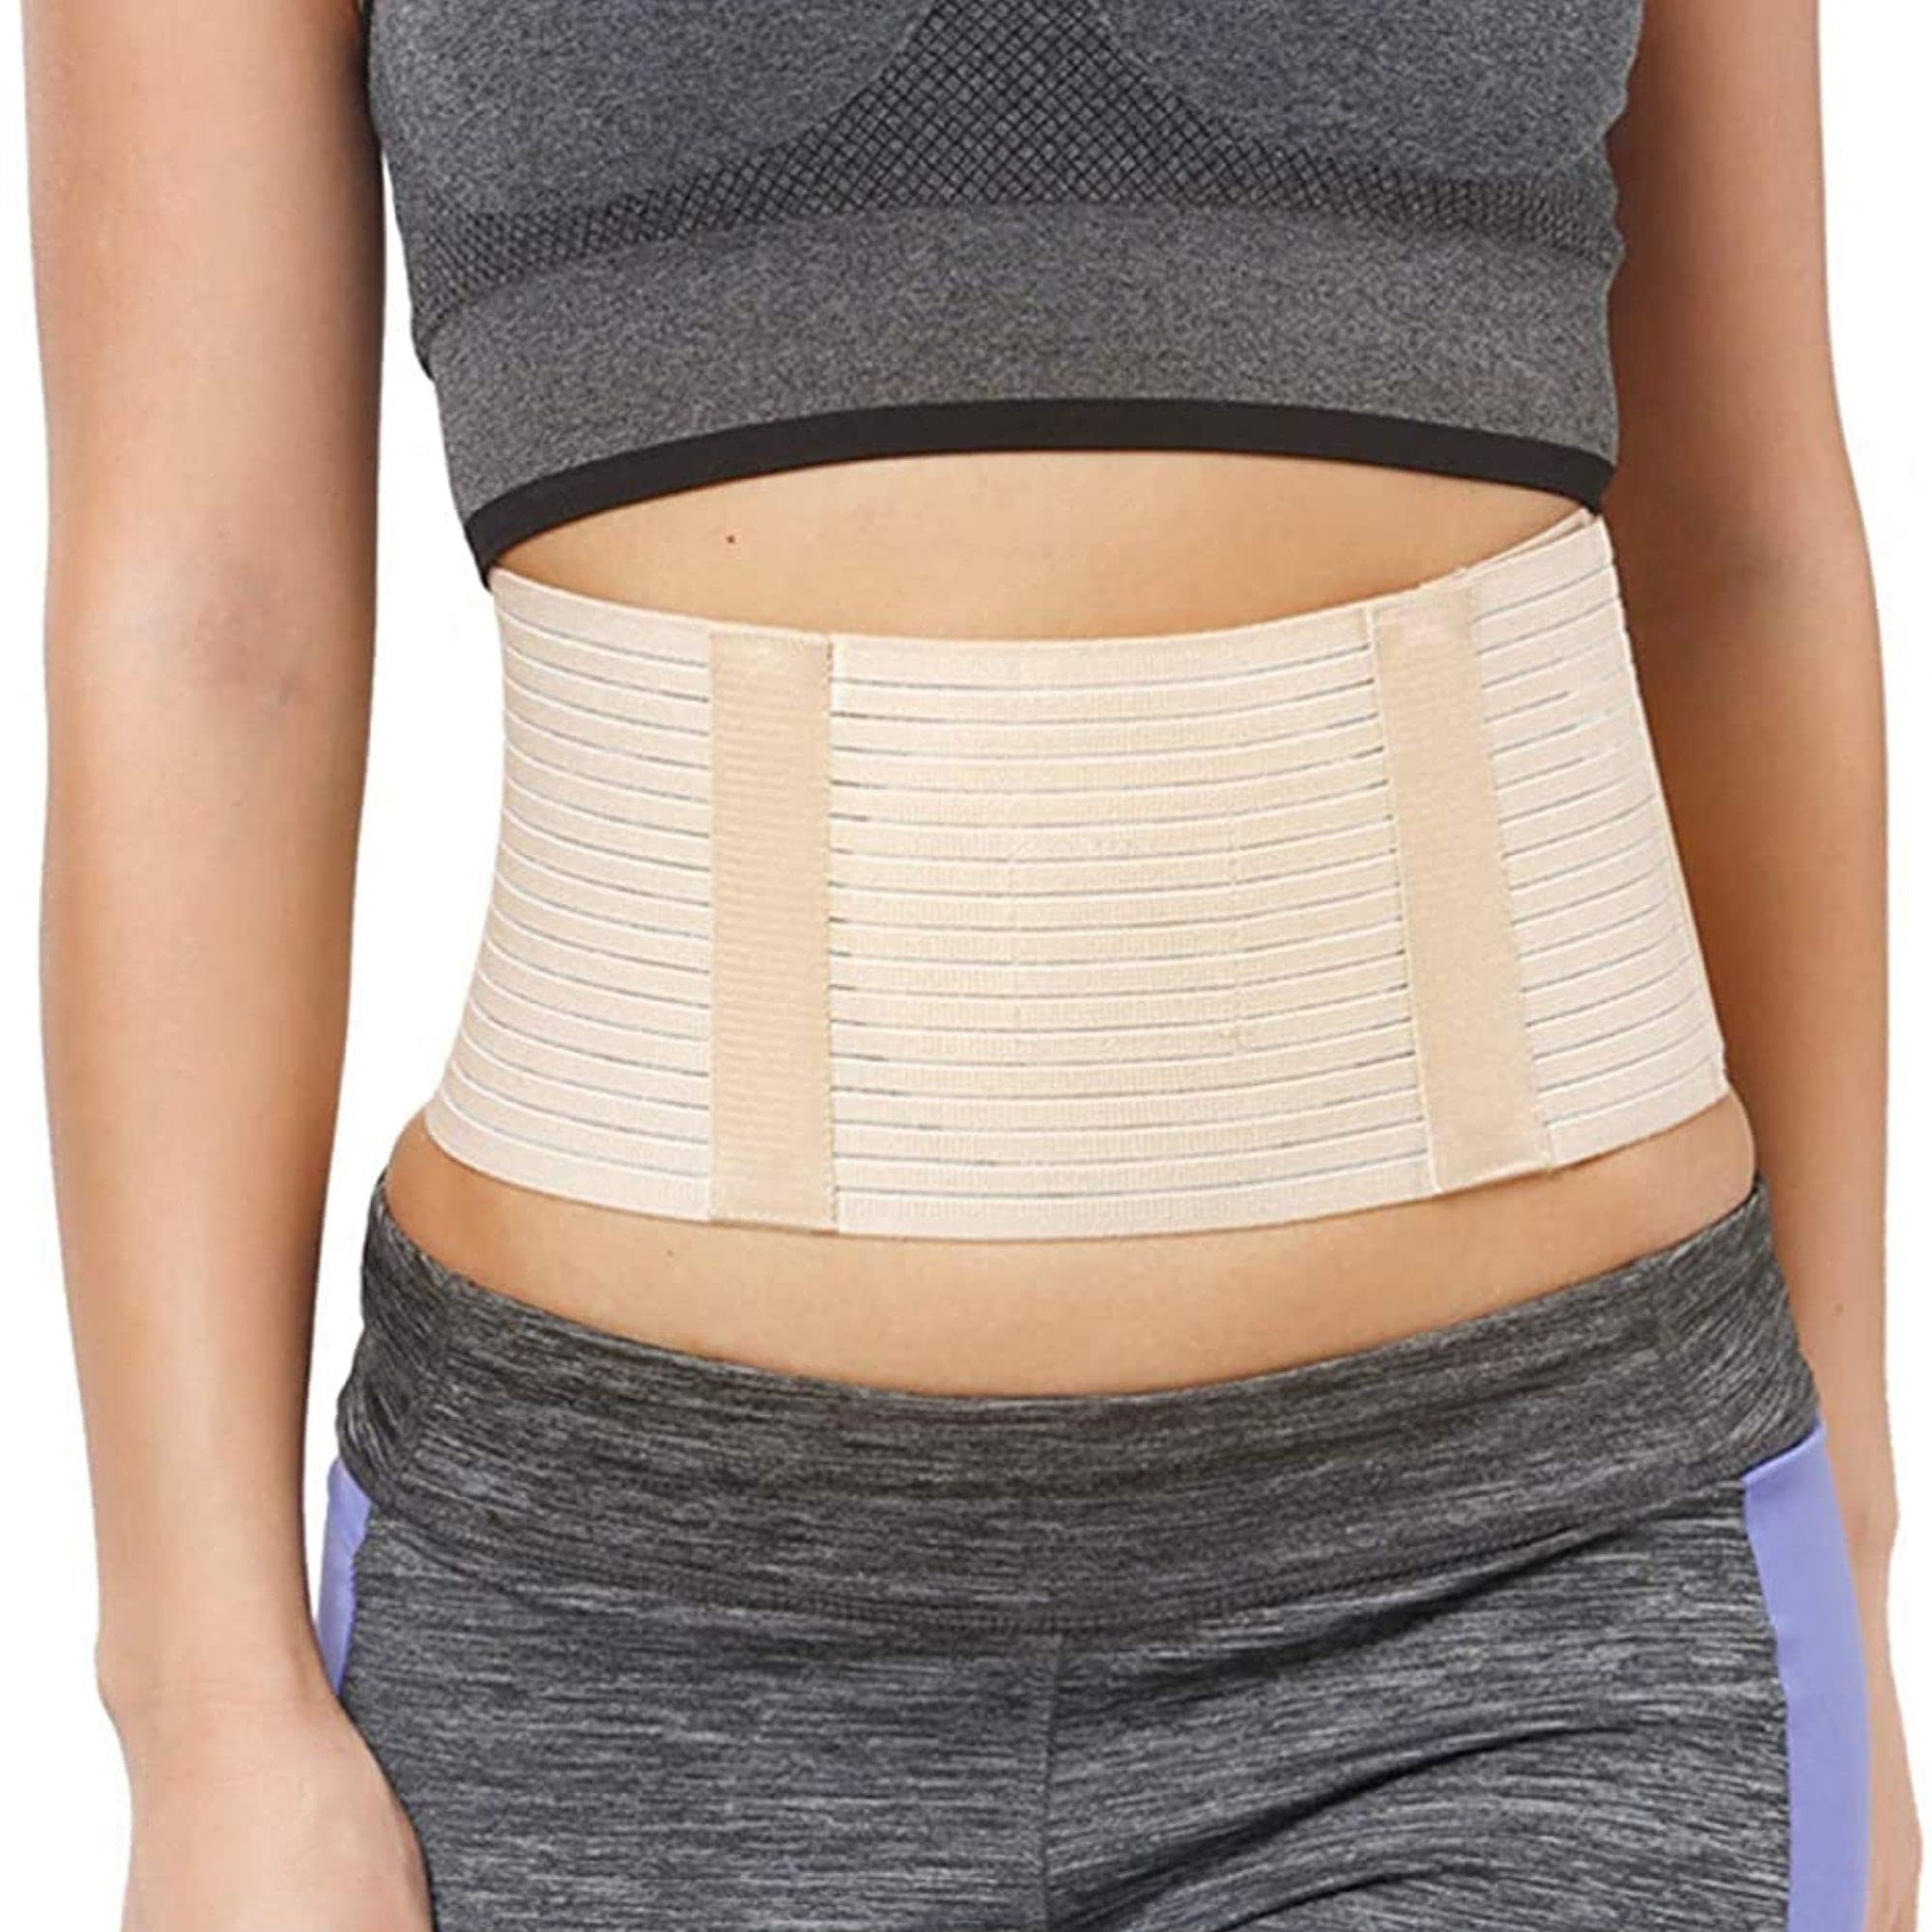 Hernia belt abdominal binder hernia belt for women umbilical hernia belt  for women abdominal binder post surgery belly binder abdominal hernia  support 